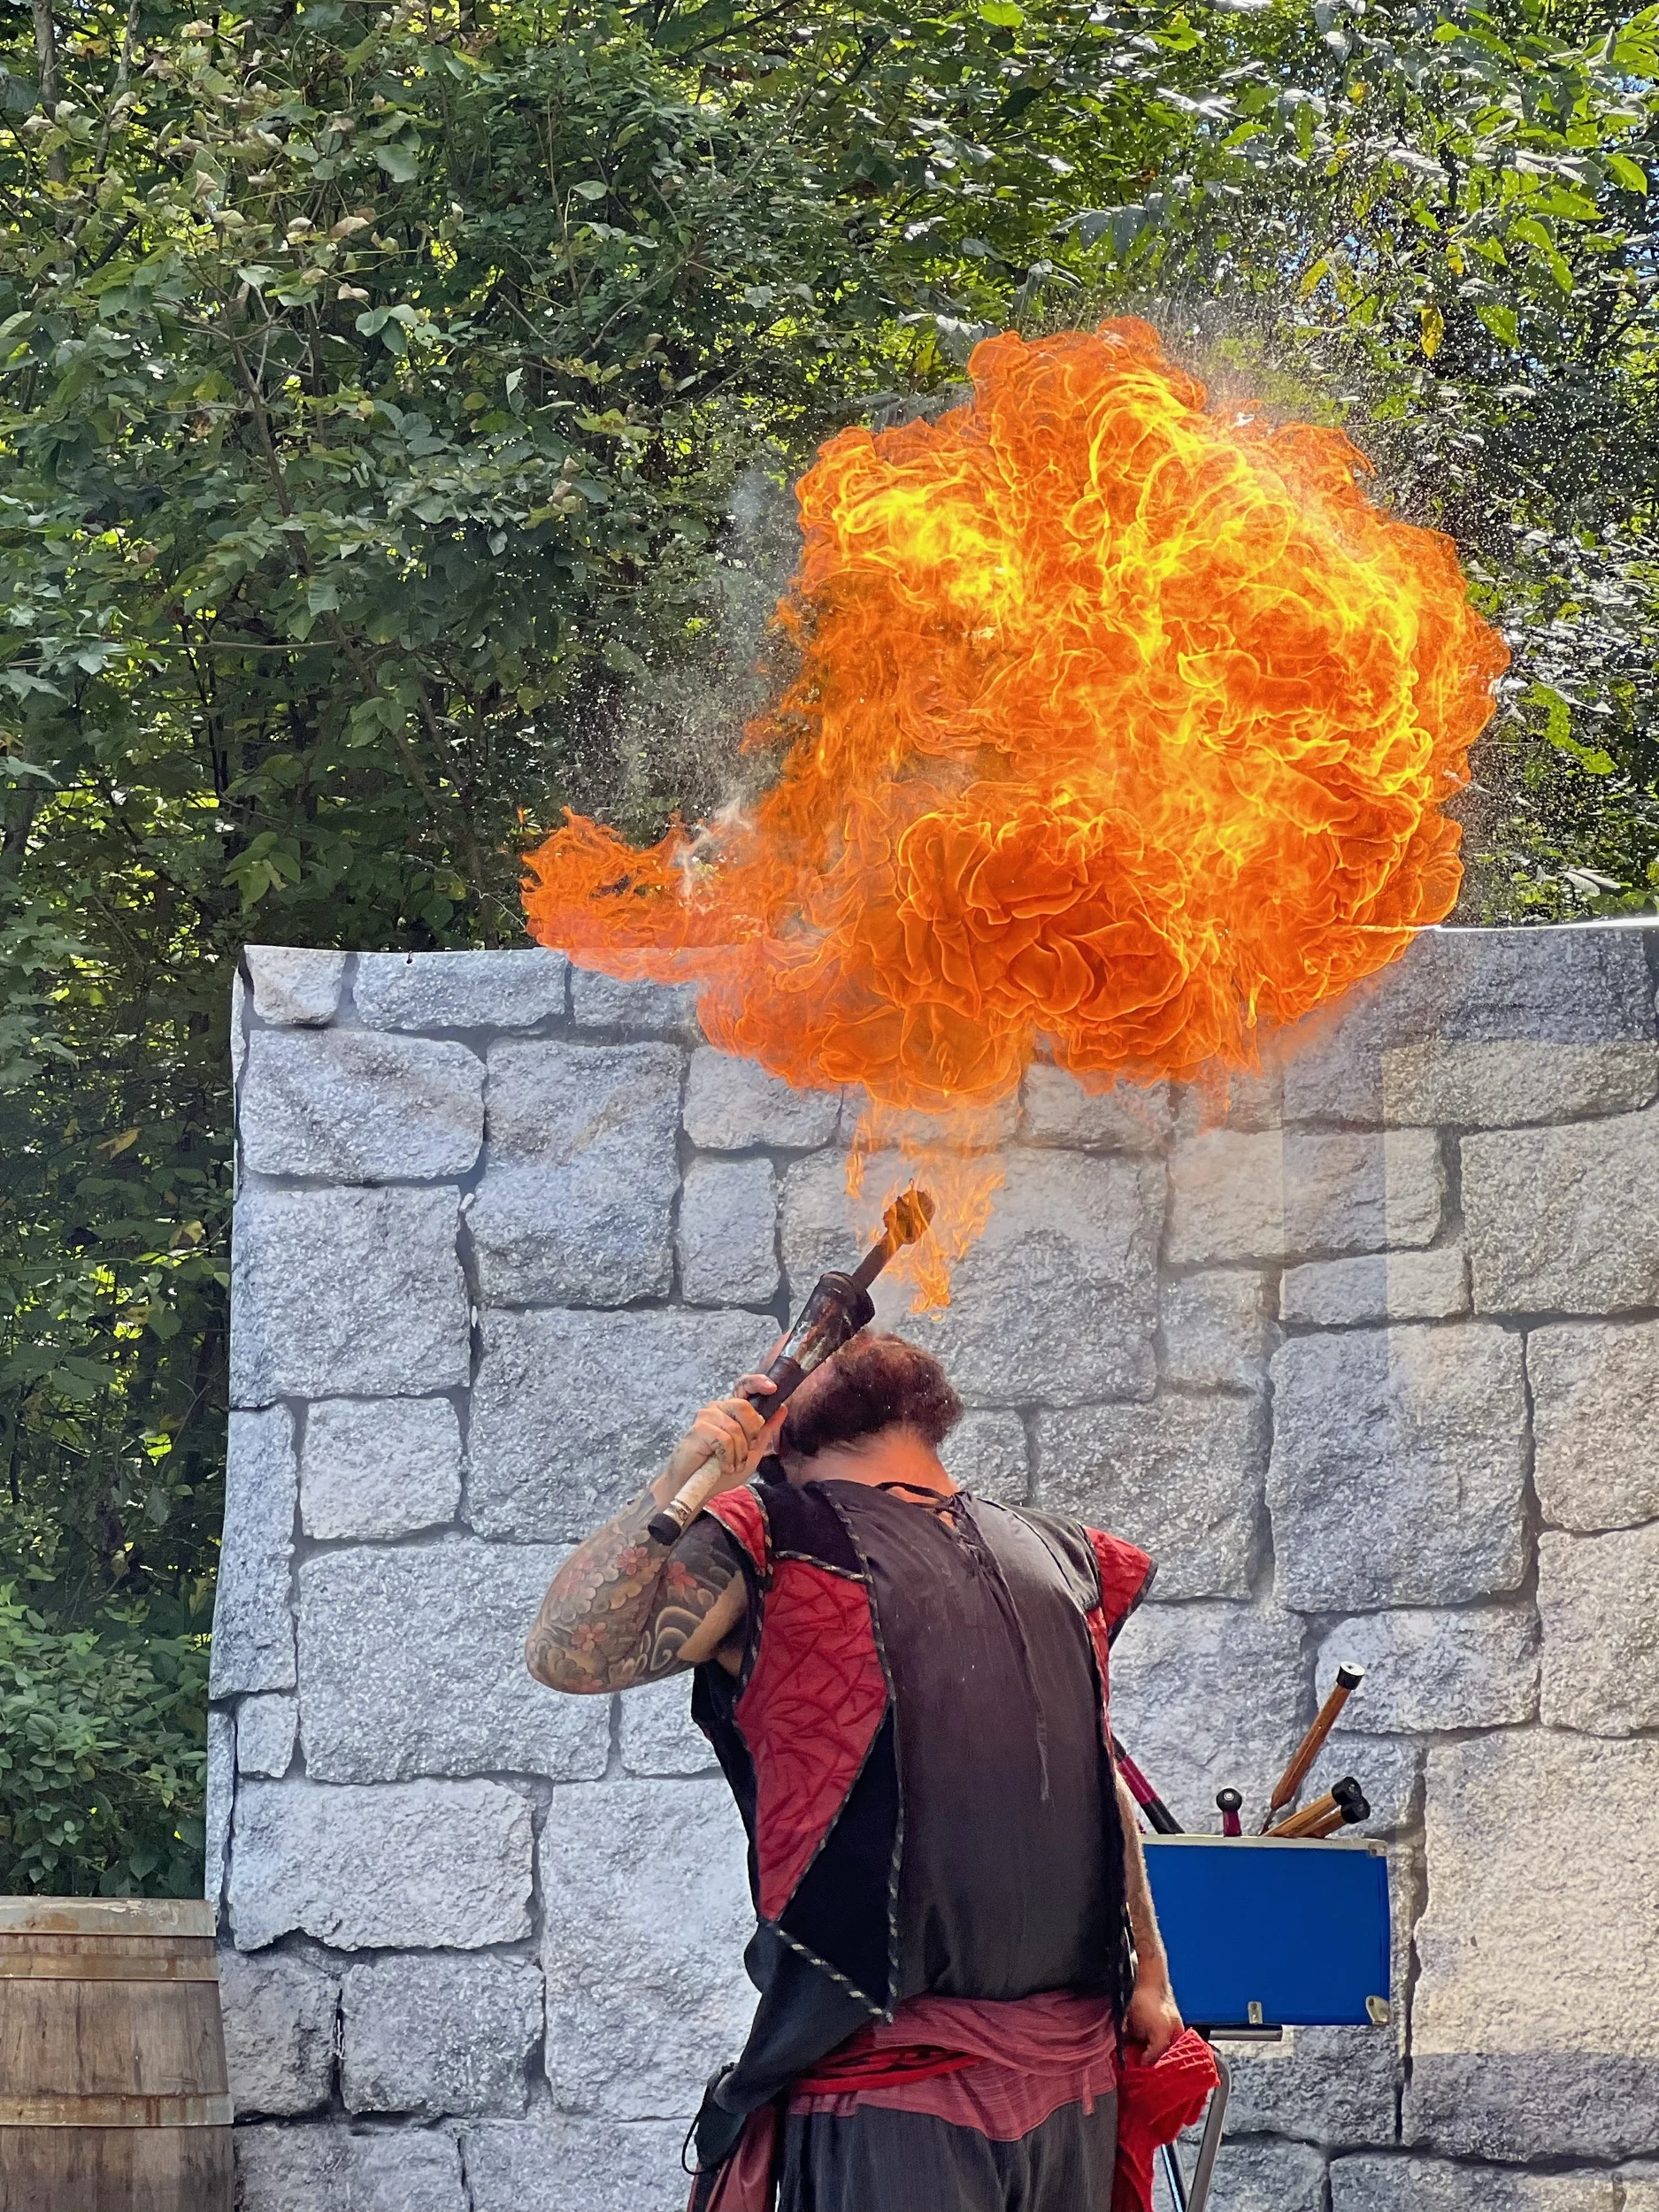 performer breathing fire